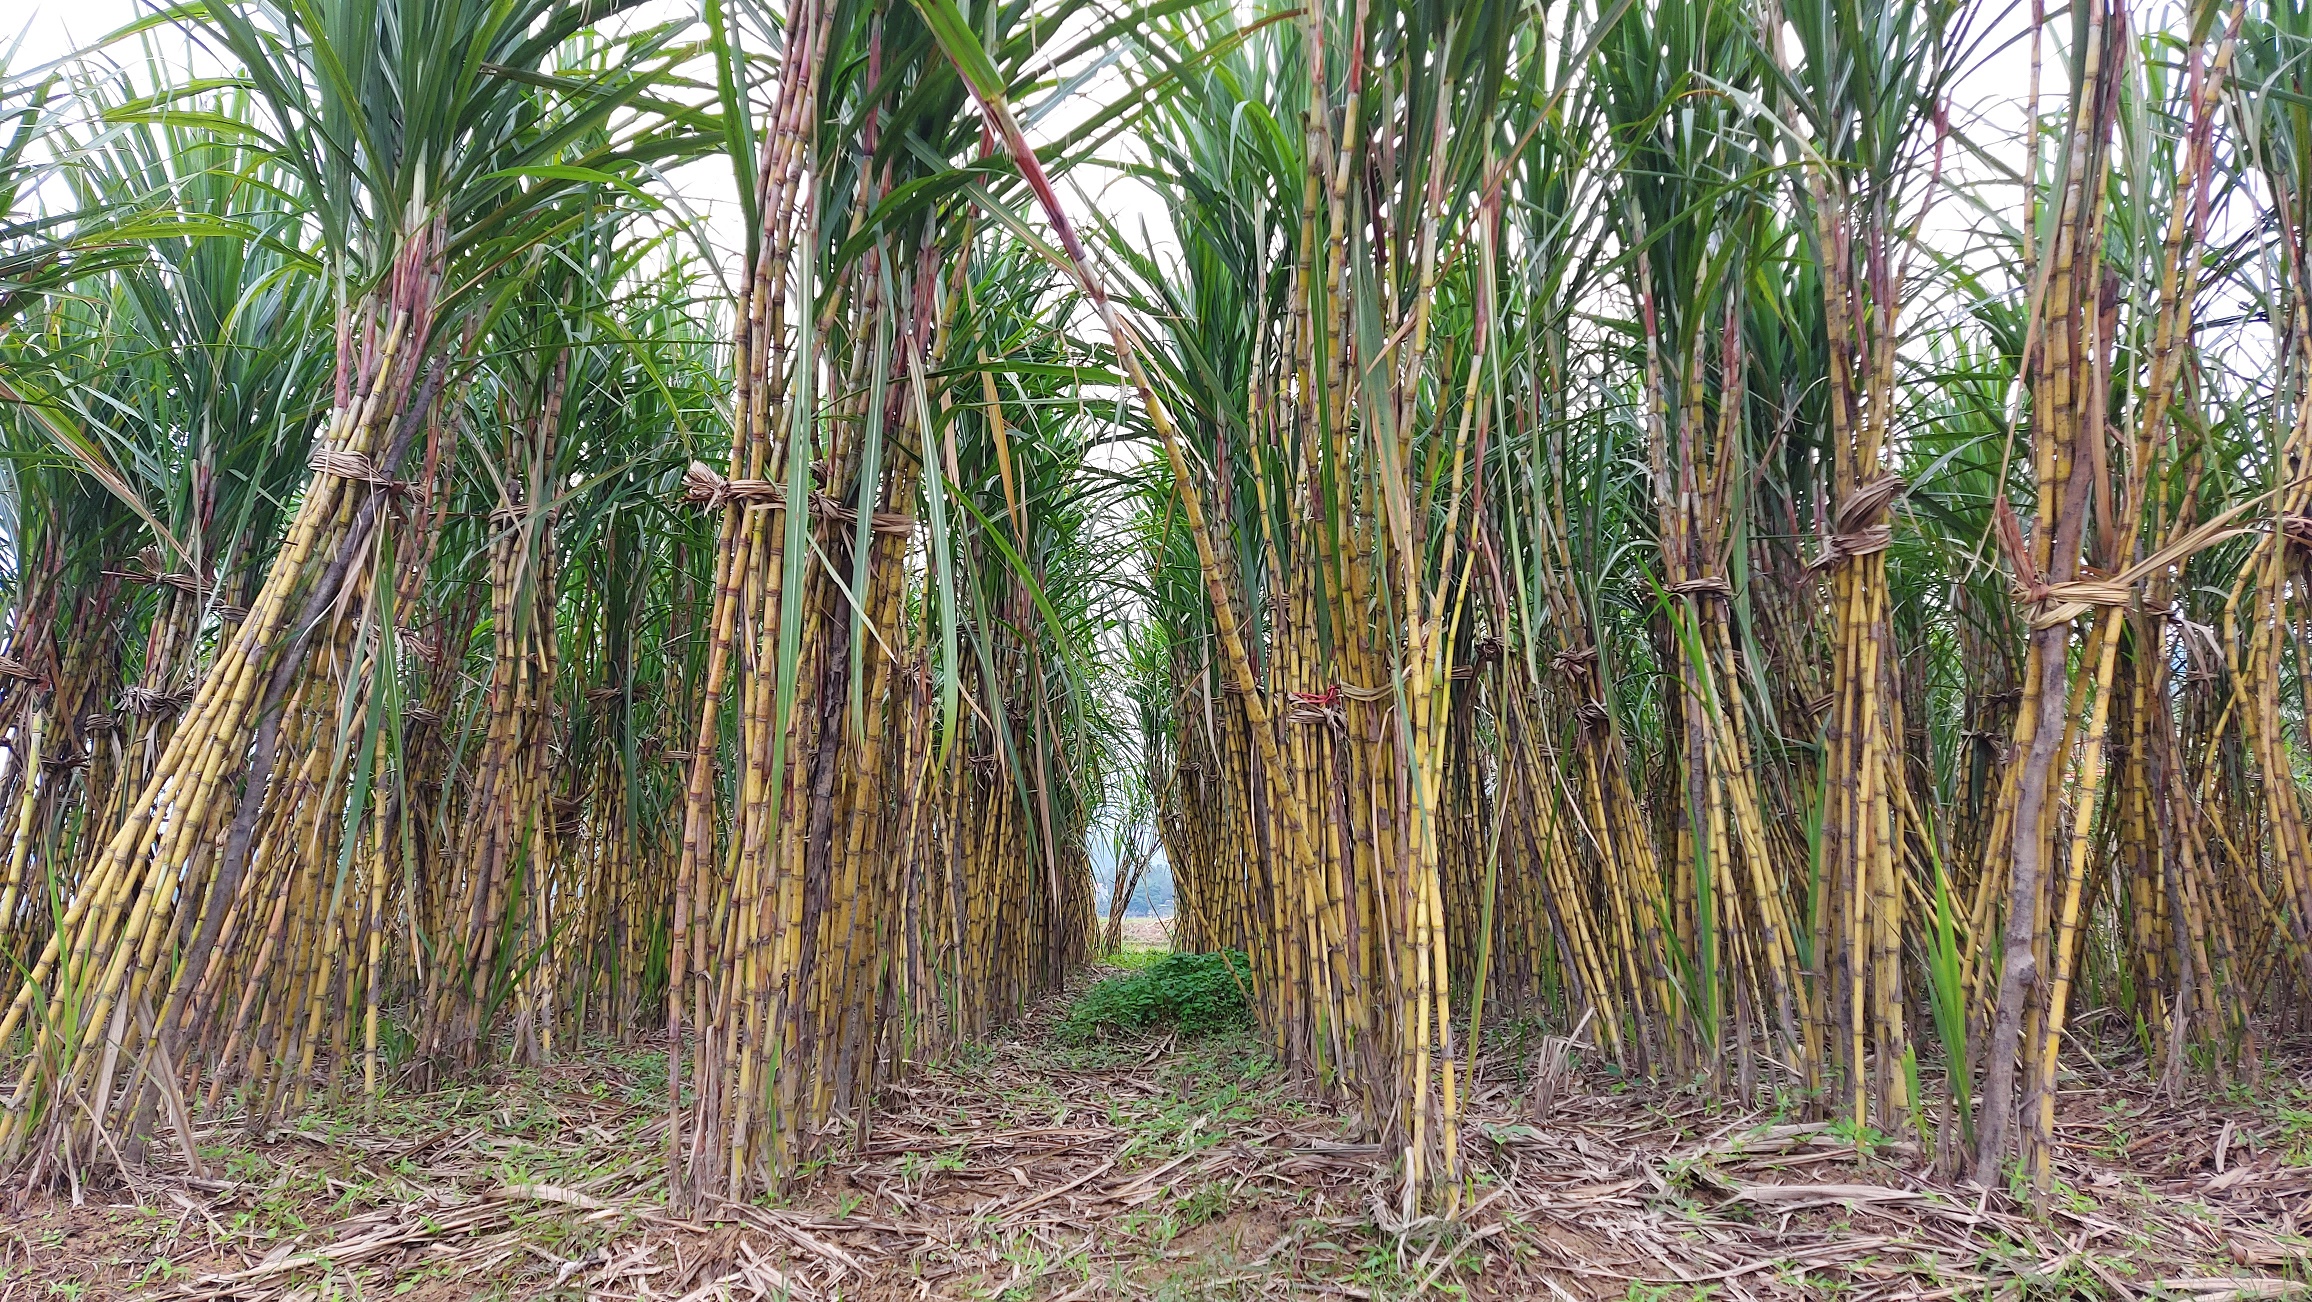 Tan Gia Thanh green sugarcane farm in Vietnam